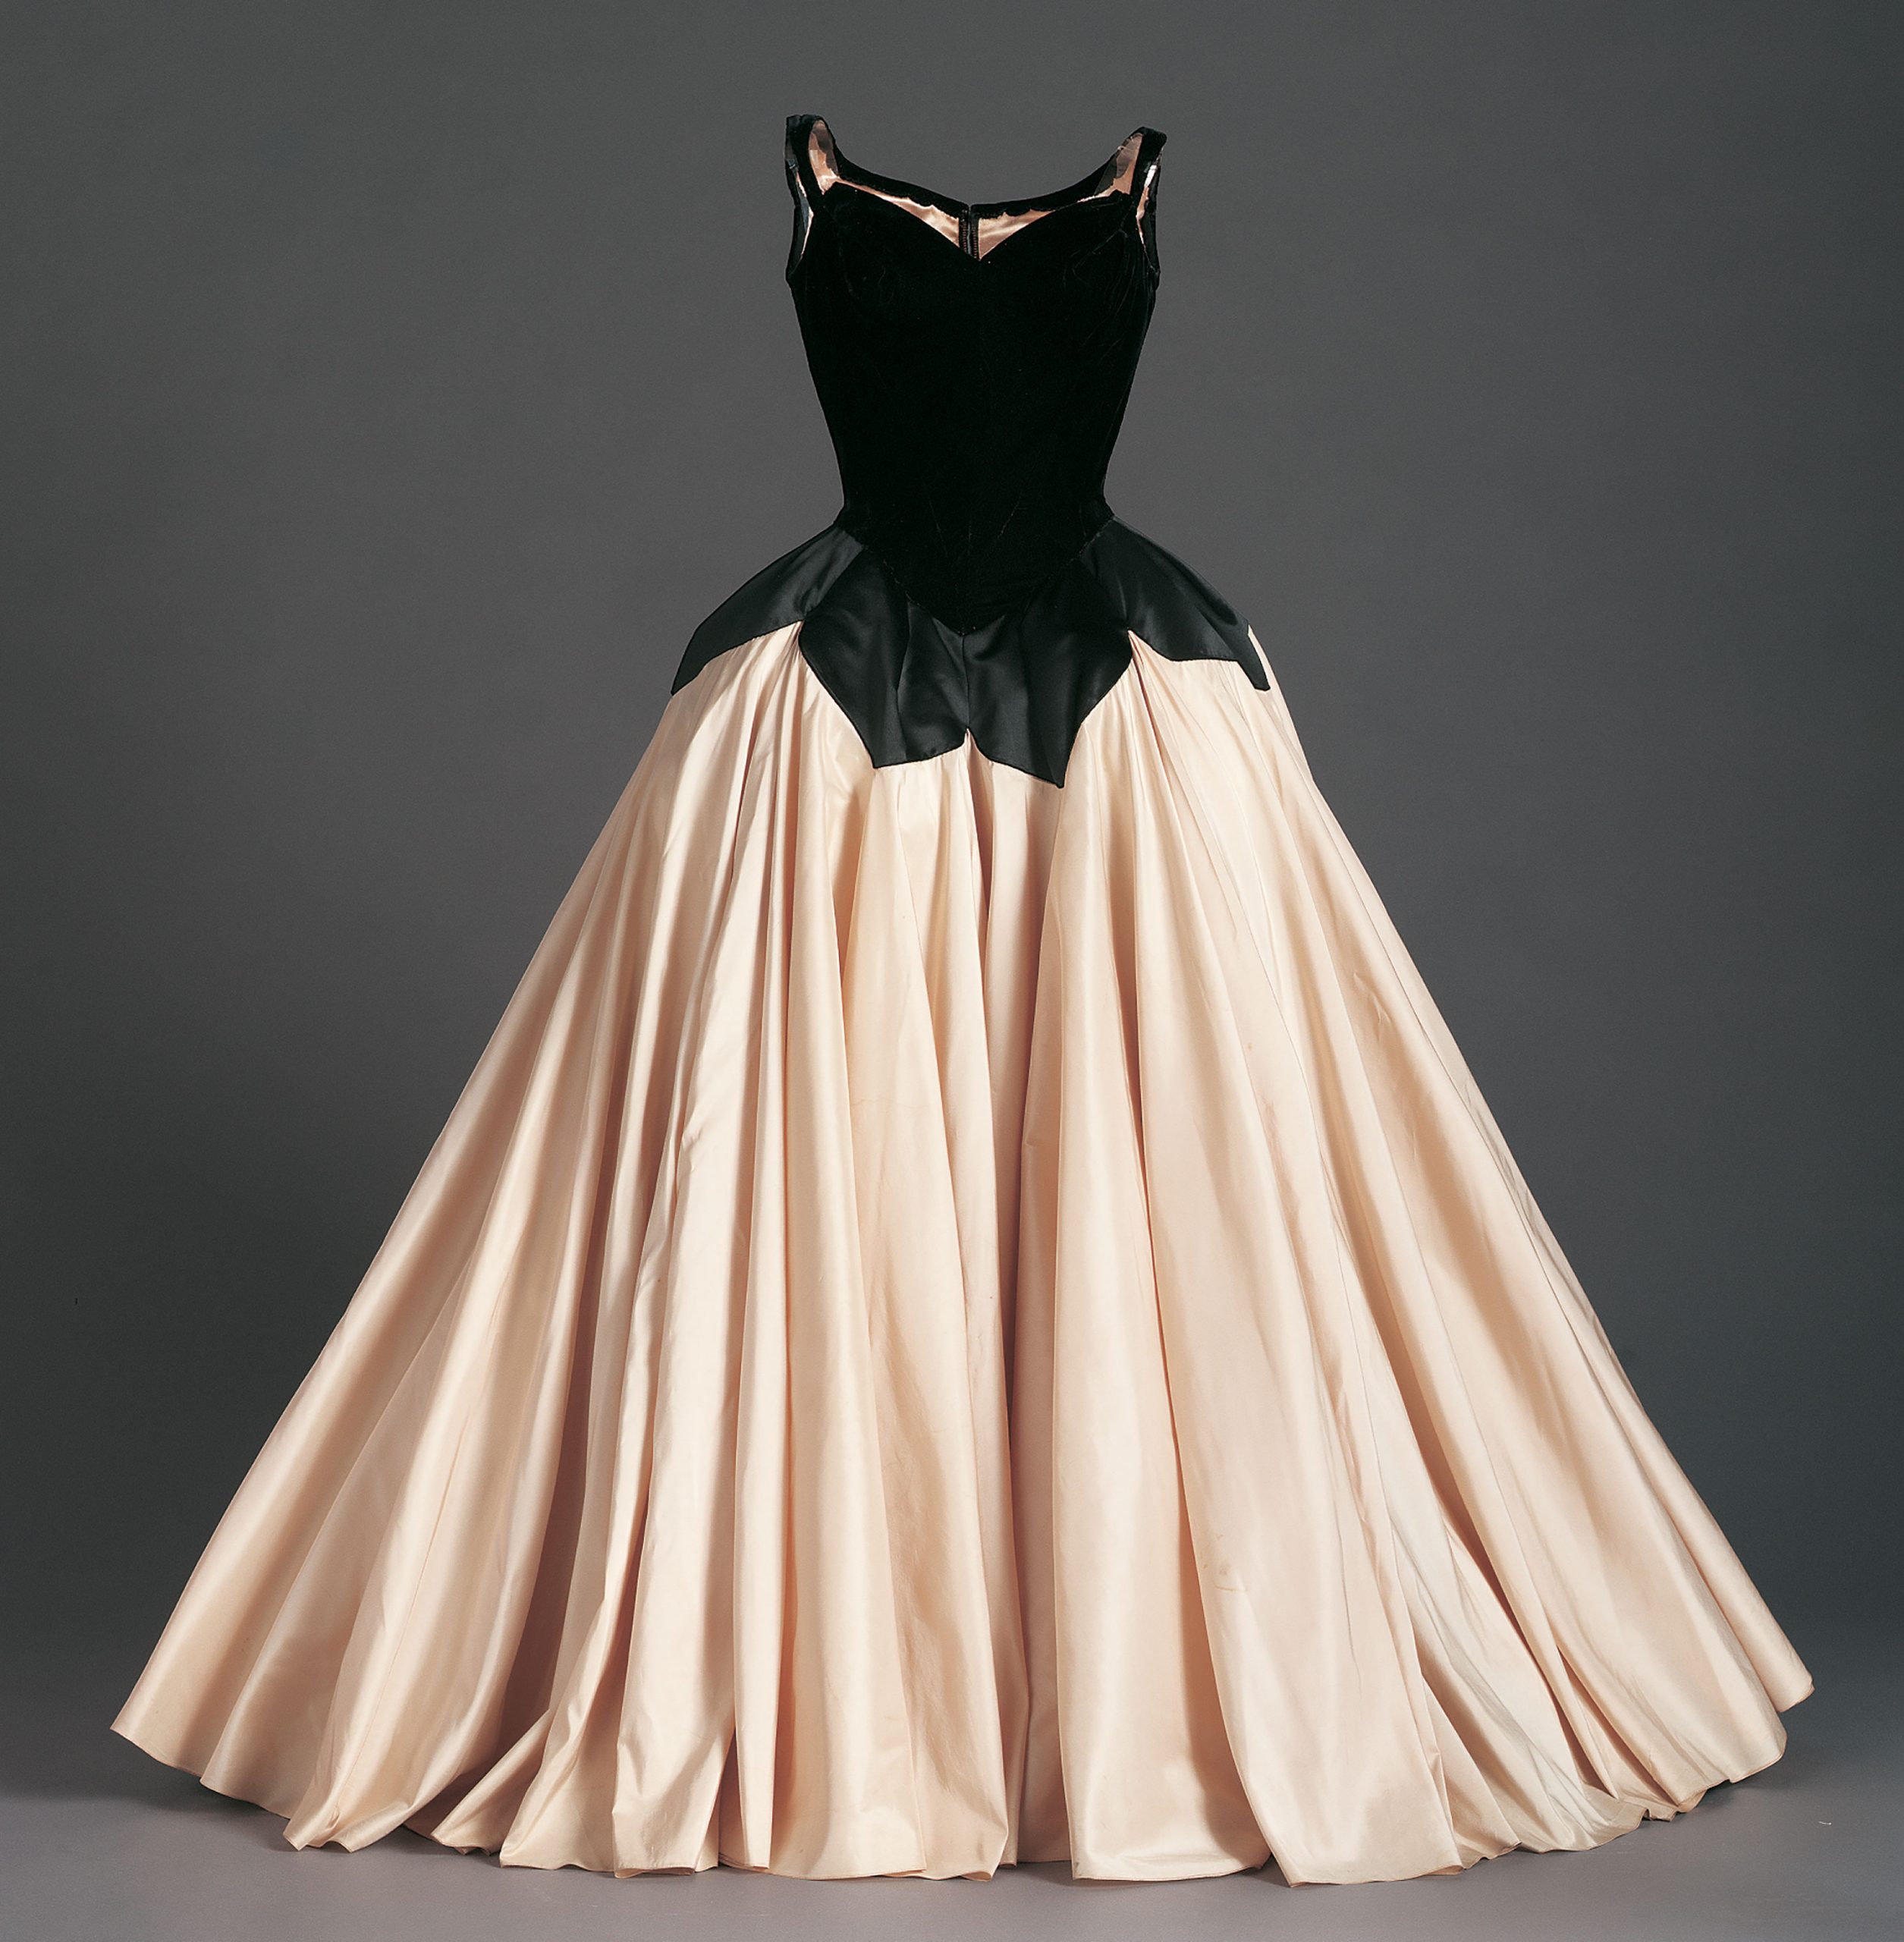 Charles James, Black velvet and ivory satin ballgown with full skirt, 1951. Silk velvet, silk faille and silk satin. Collection of Phoenix Art Museum, Gift of Mrs. Eleanor S. W. McCollum.